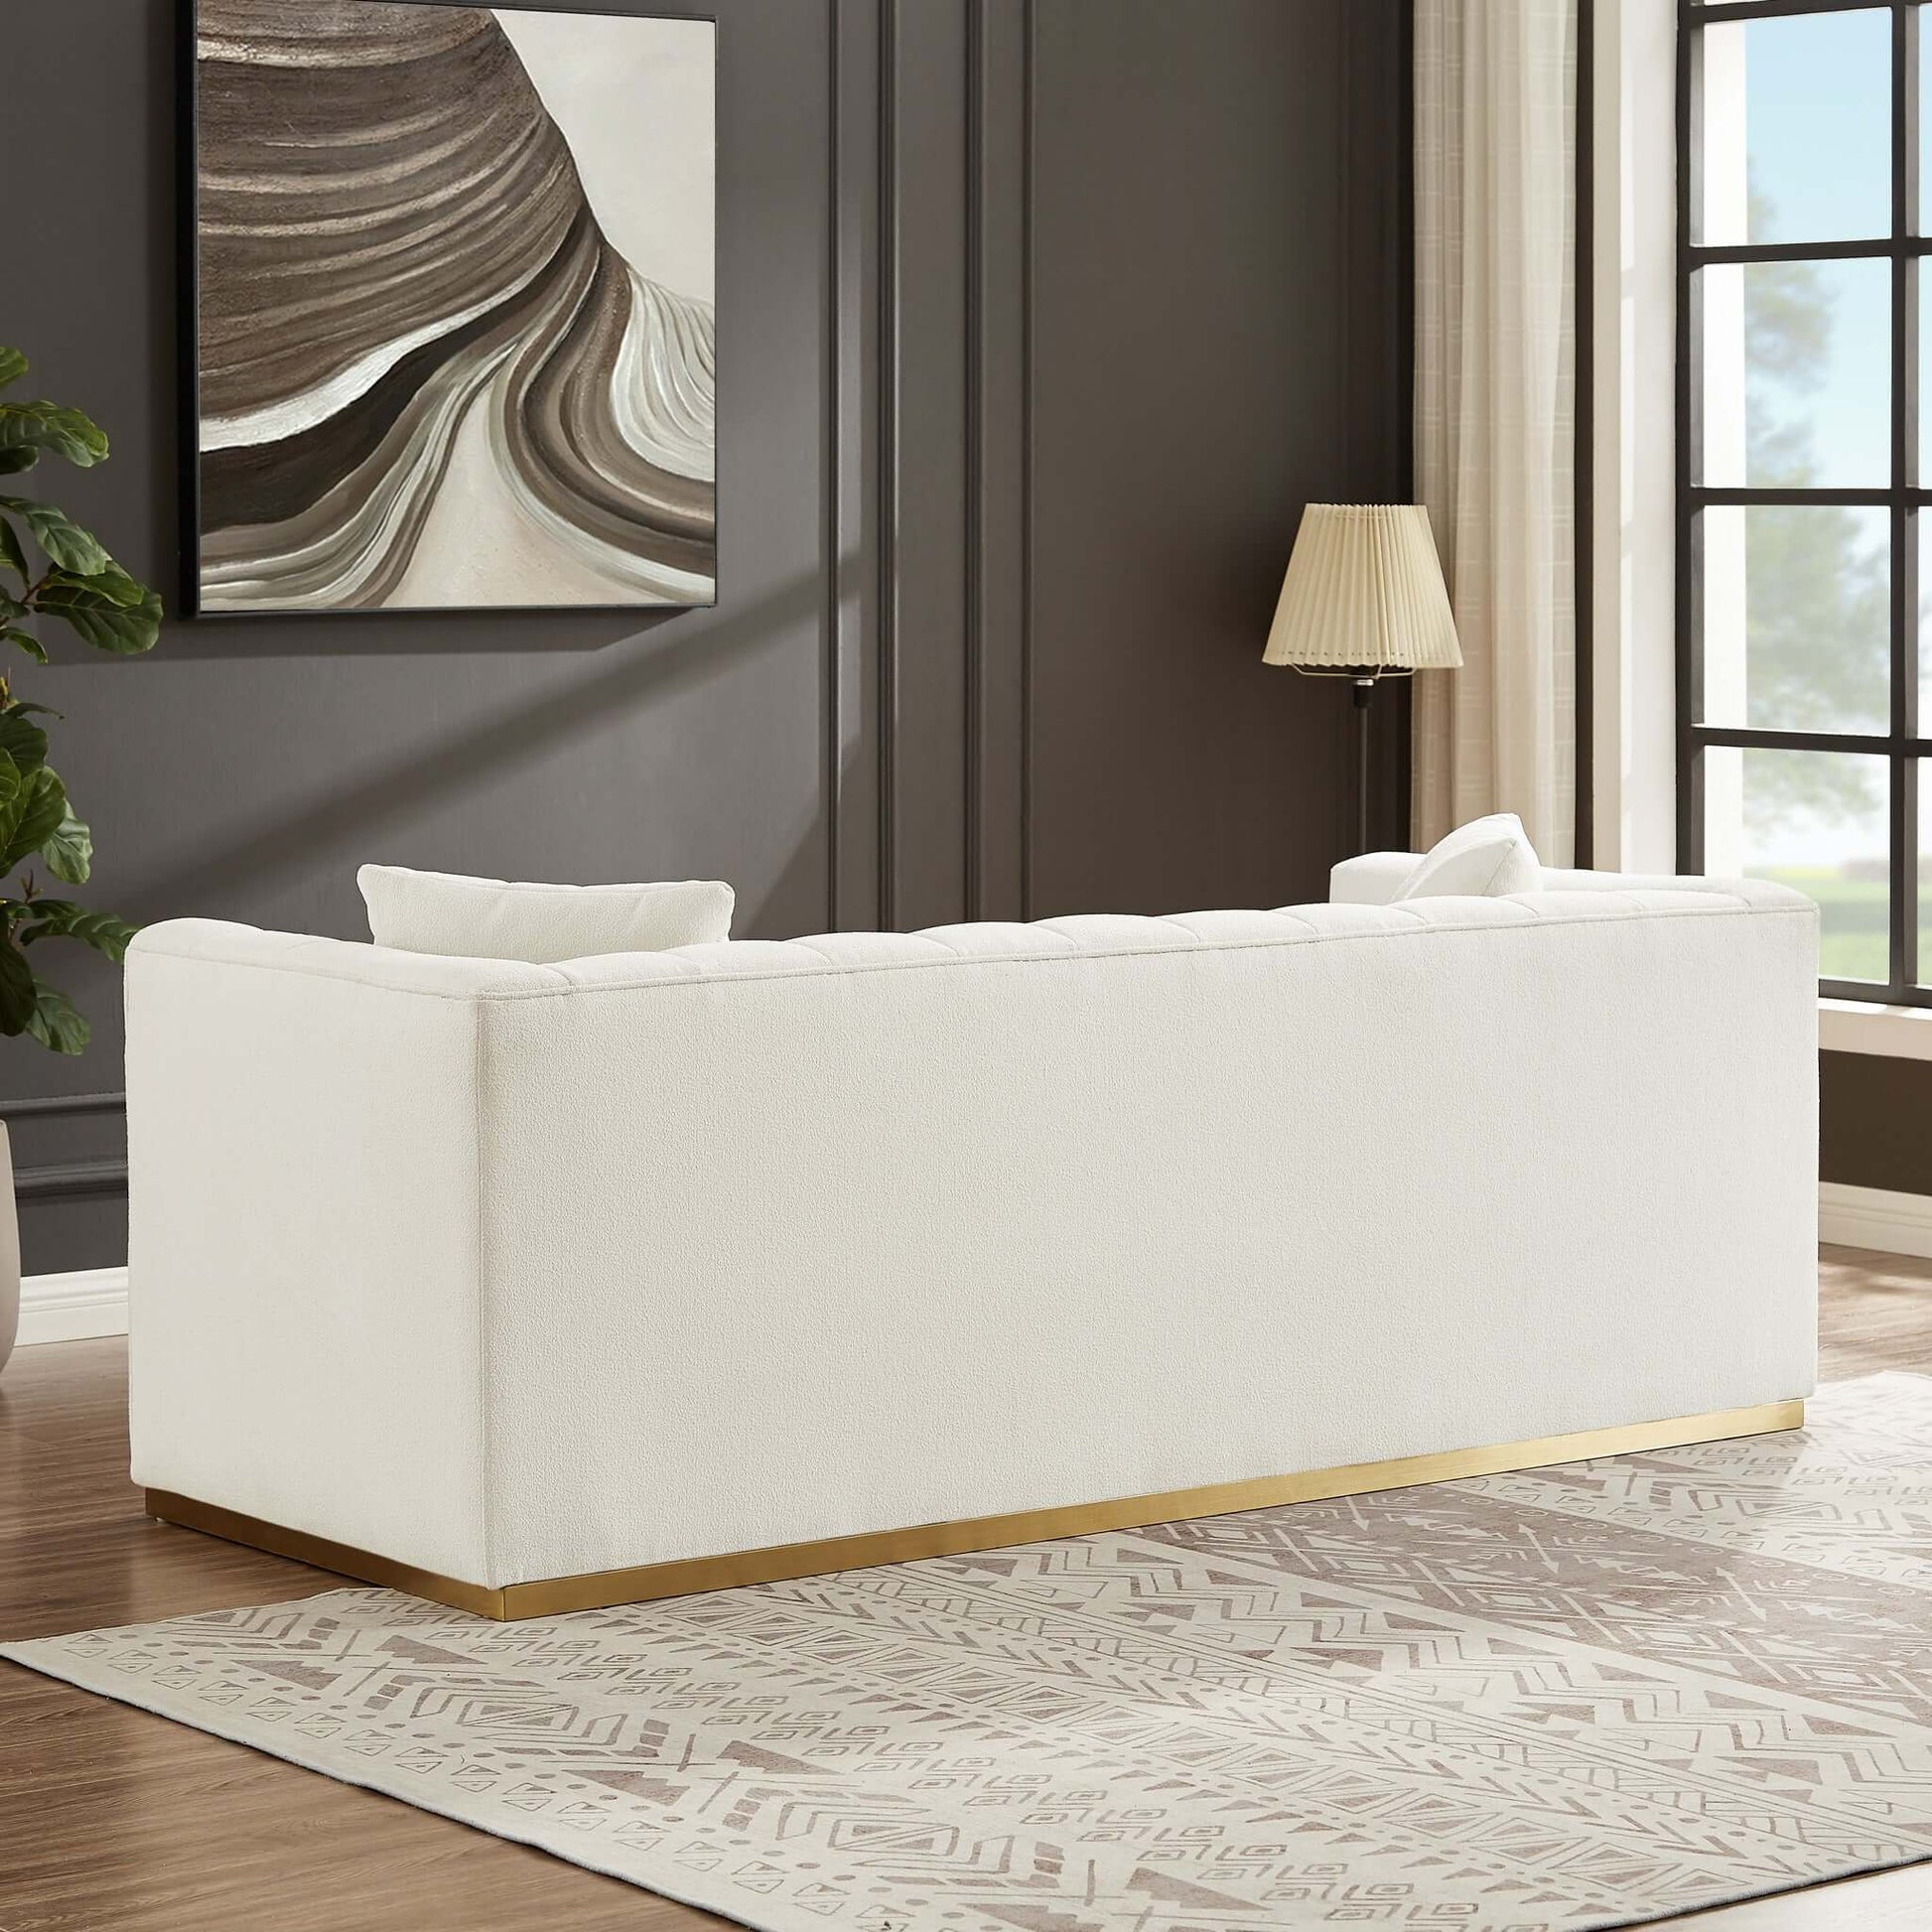 Ashcroft Furniture Co Sofas Eleanor Mid-Century Modern Sofa Beige Boucle